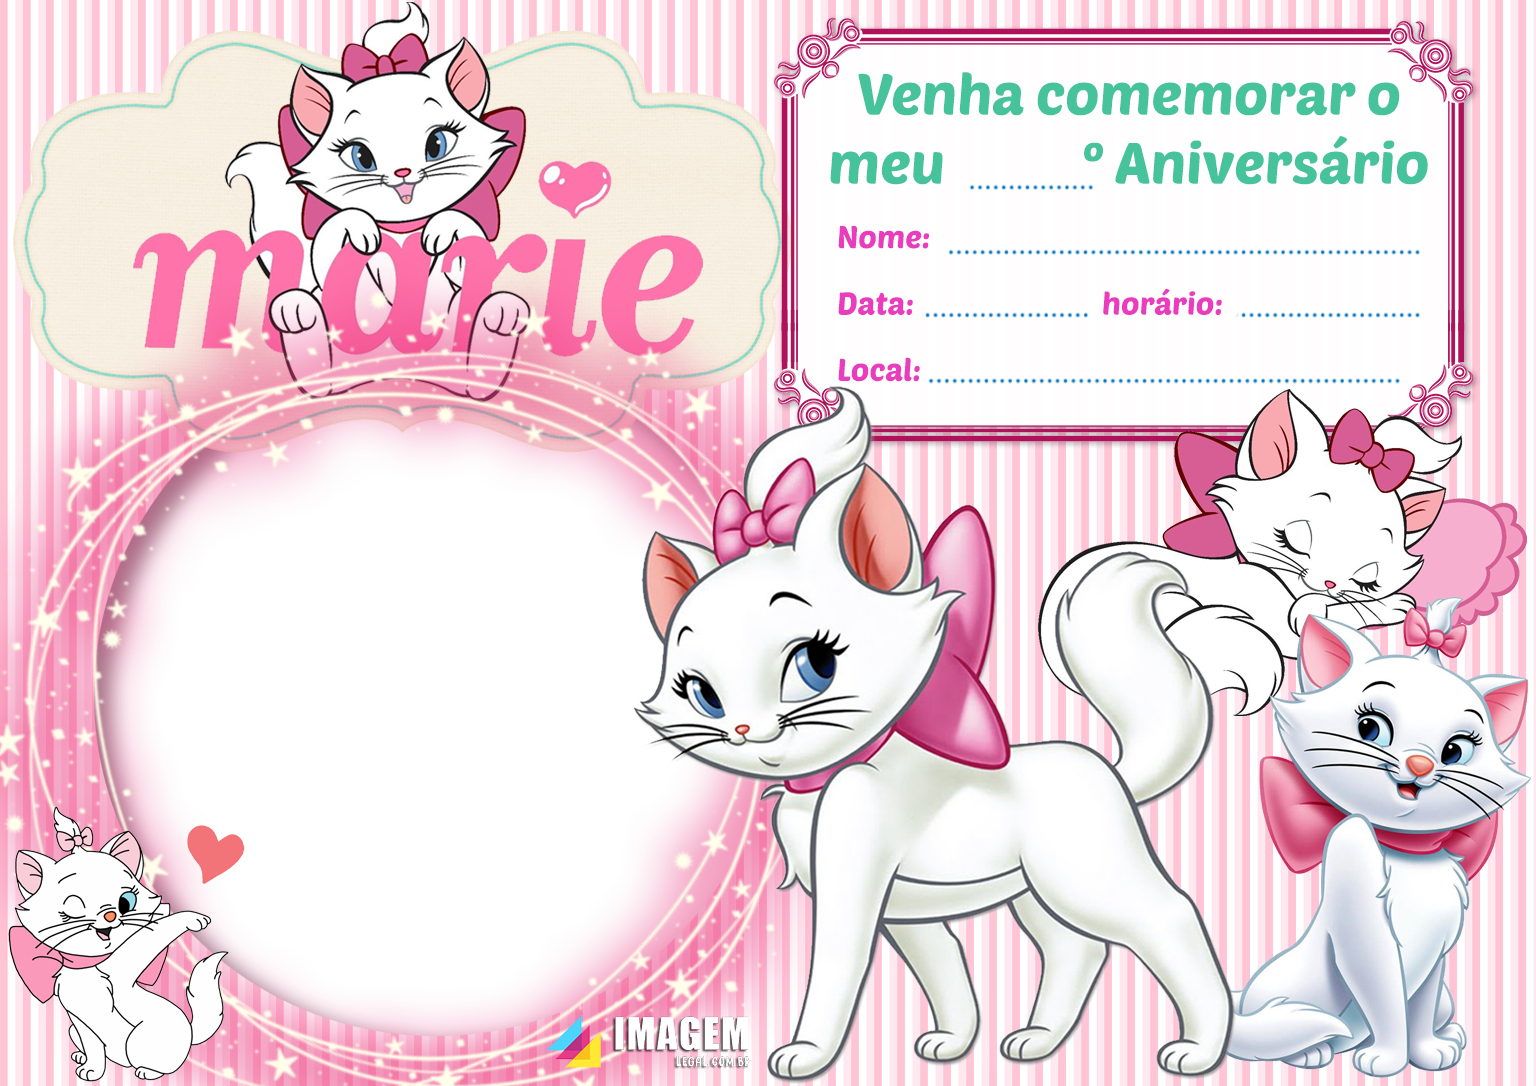 Convite Aniversário Gatinha Marie Edite Online